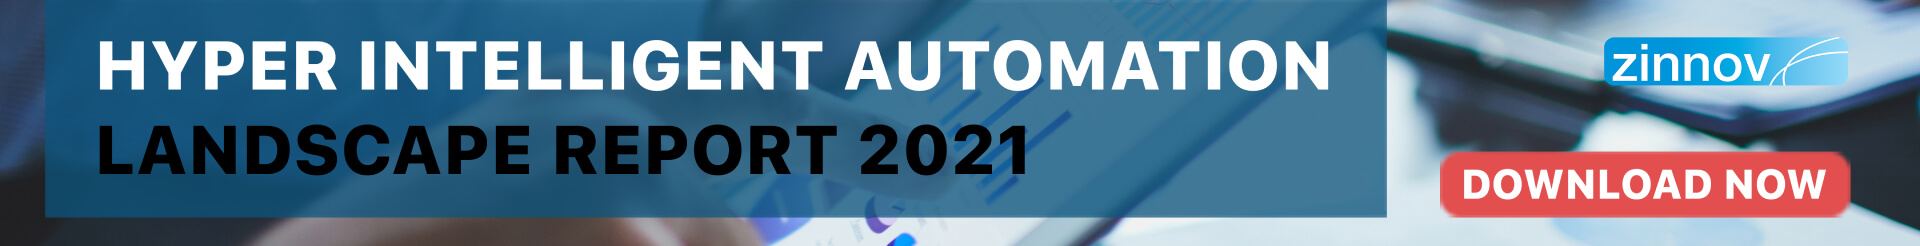 Hyper Intelligent Automation Landscape Report 2021